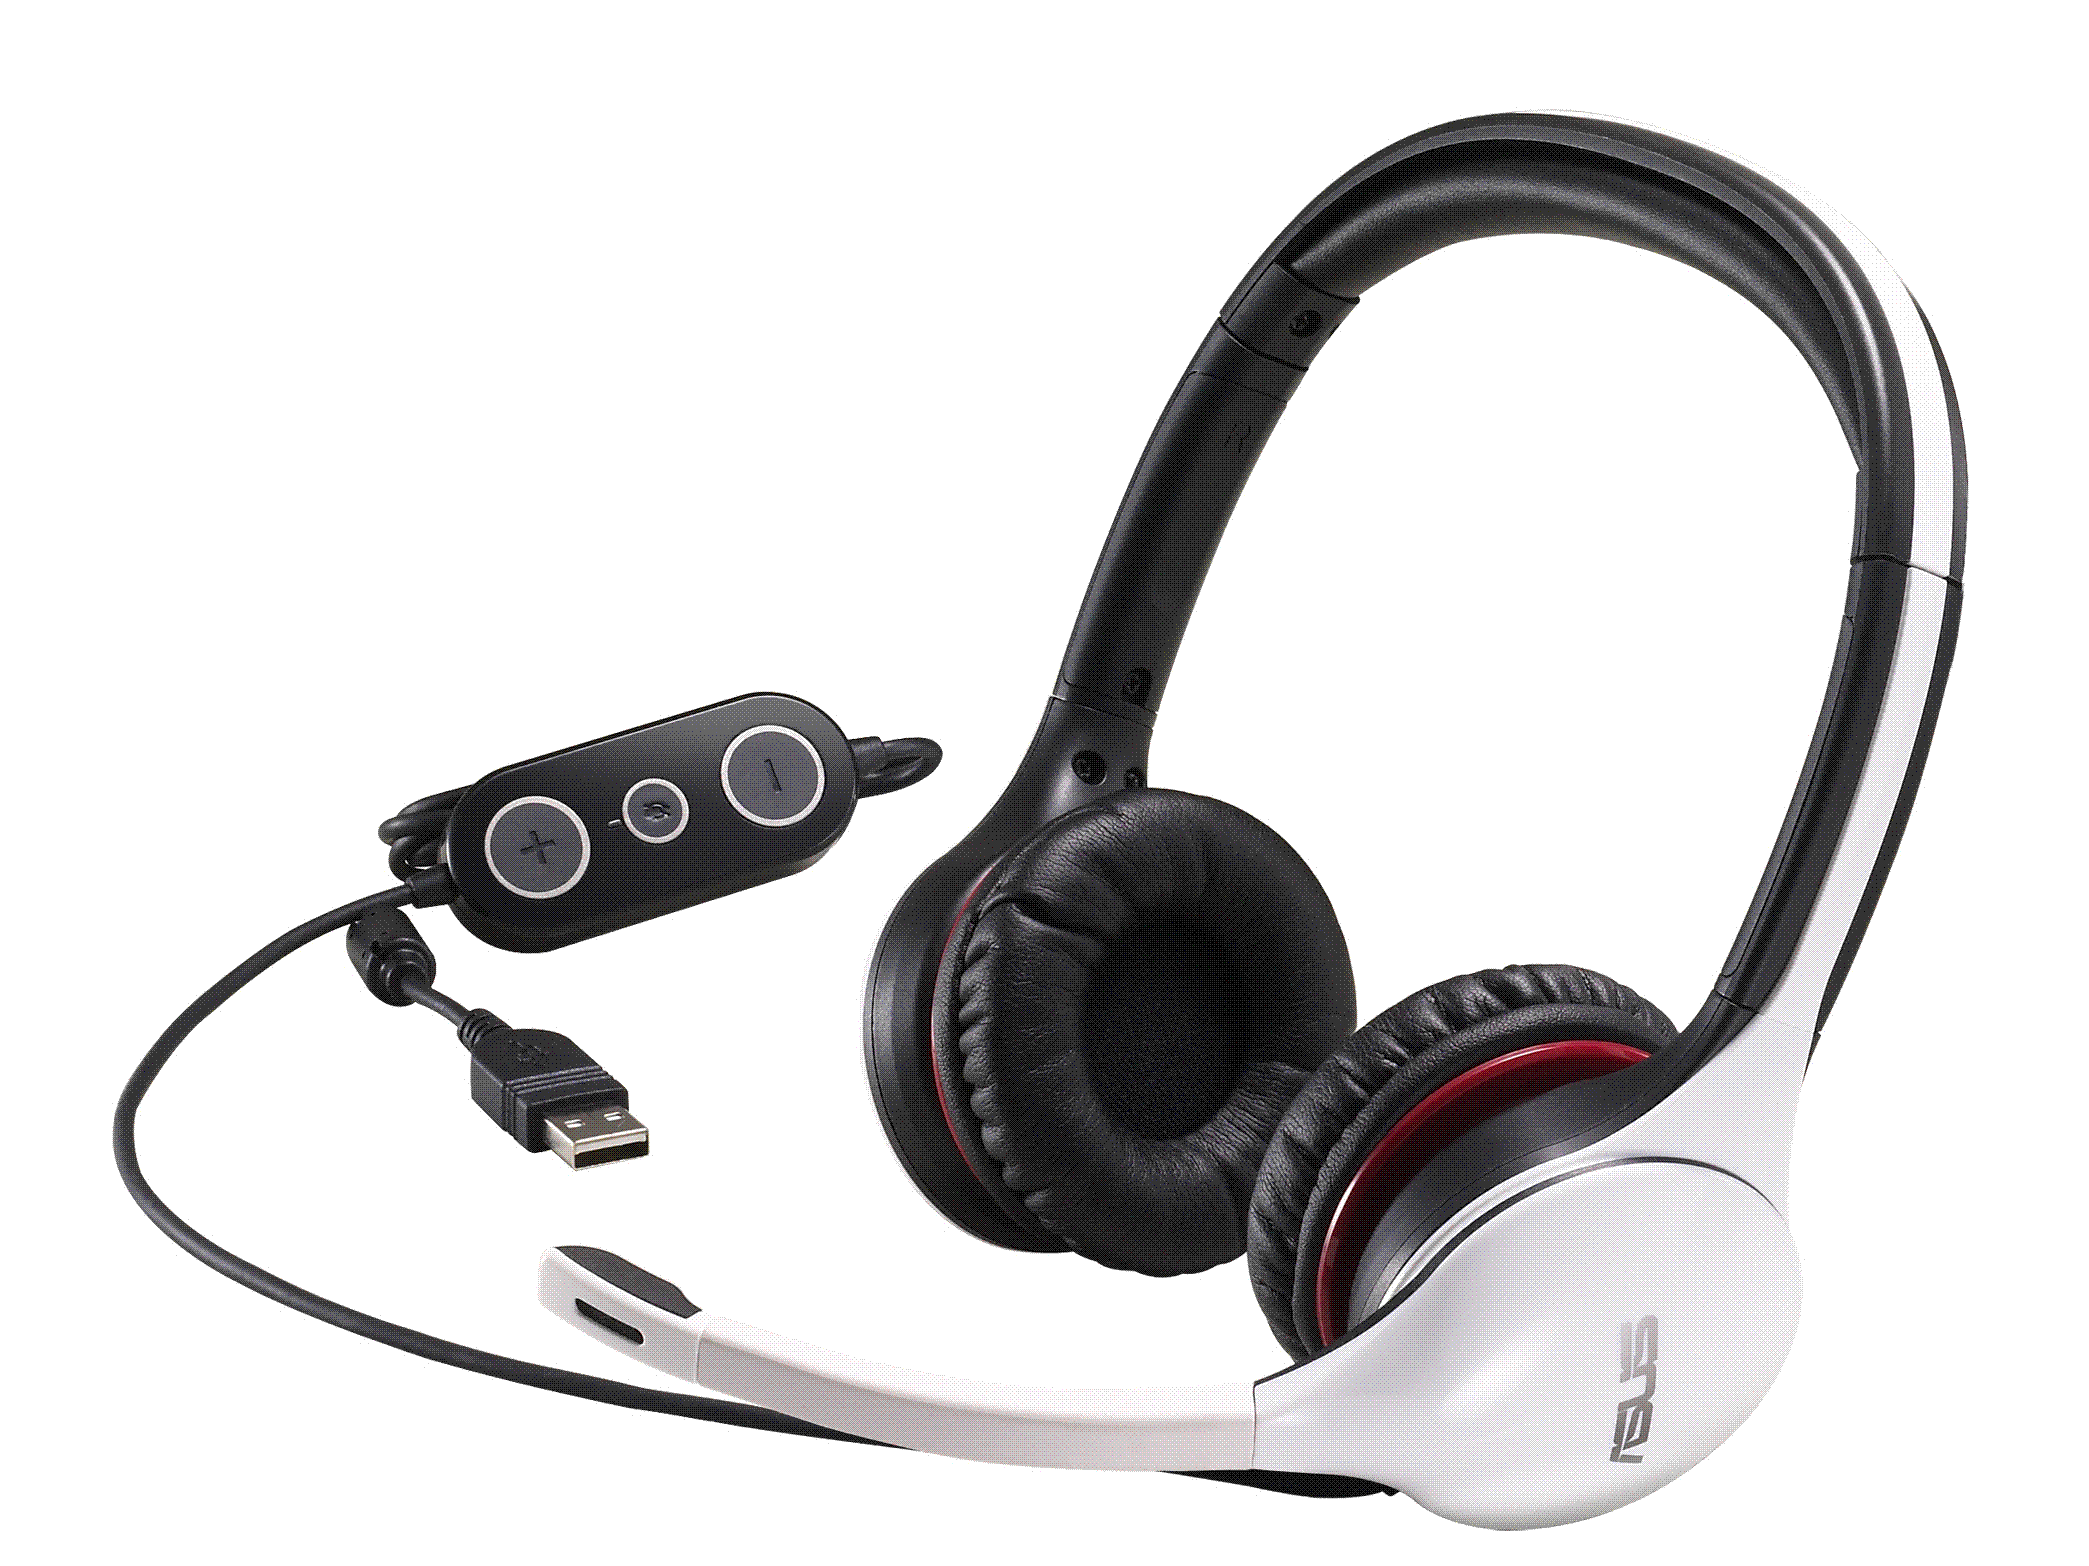 Asus CineVibe headphones - we're intrigued as well!